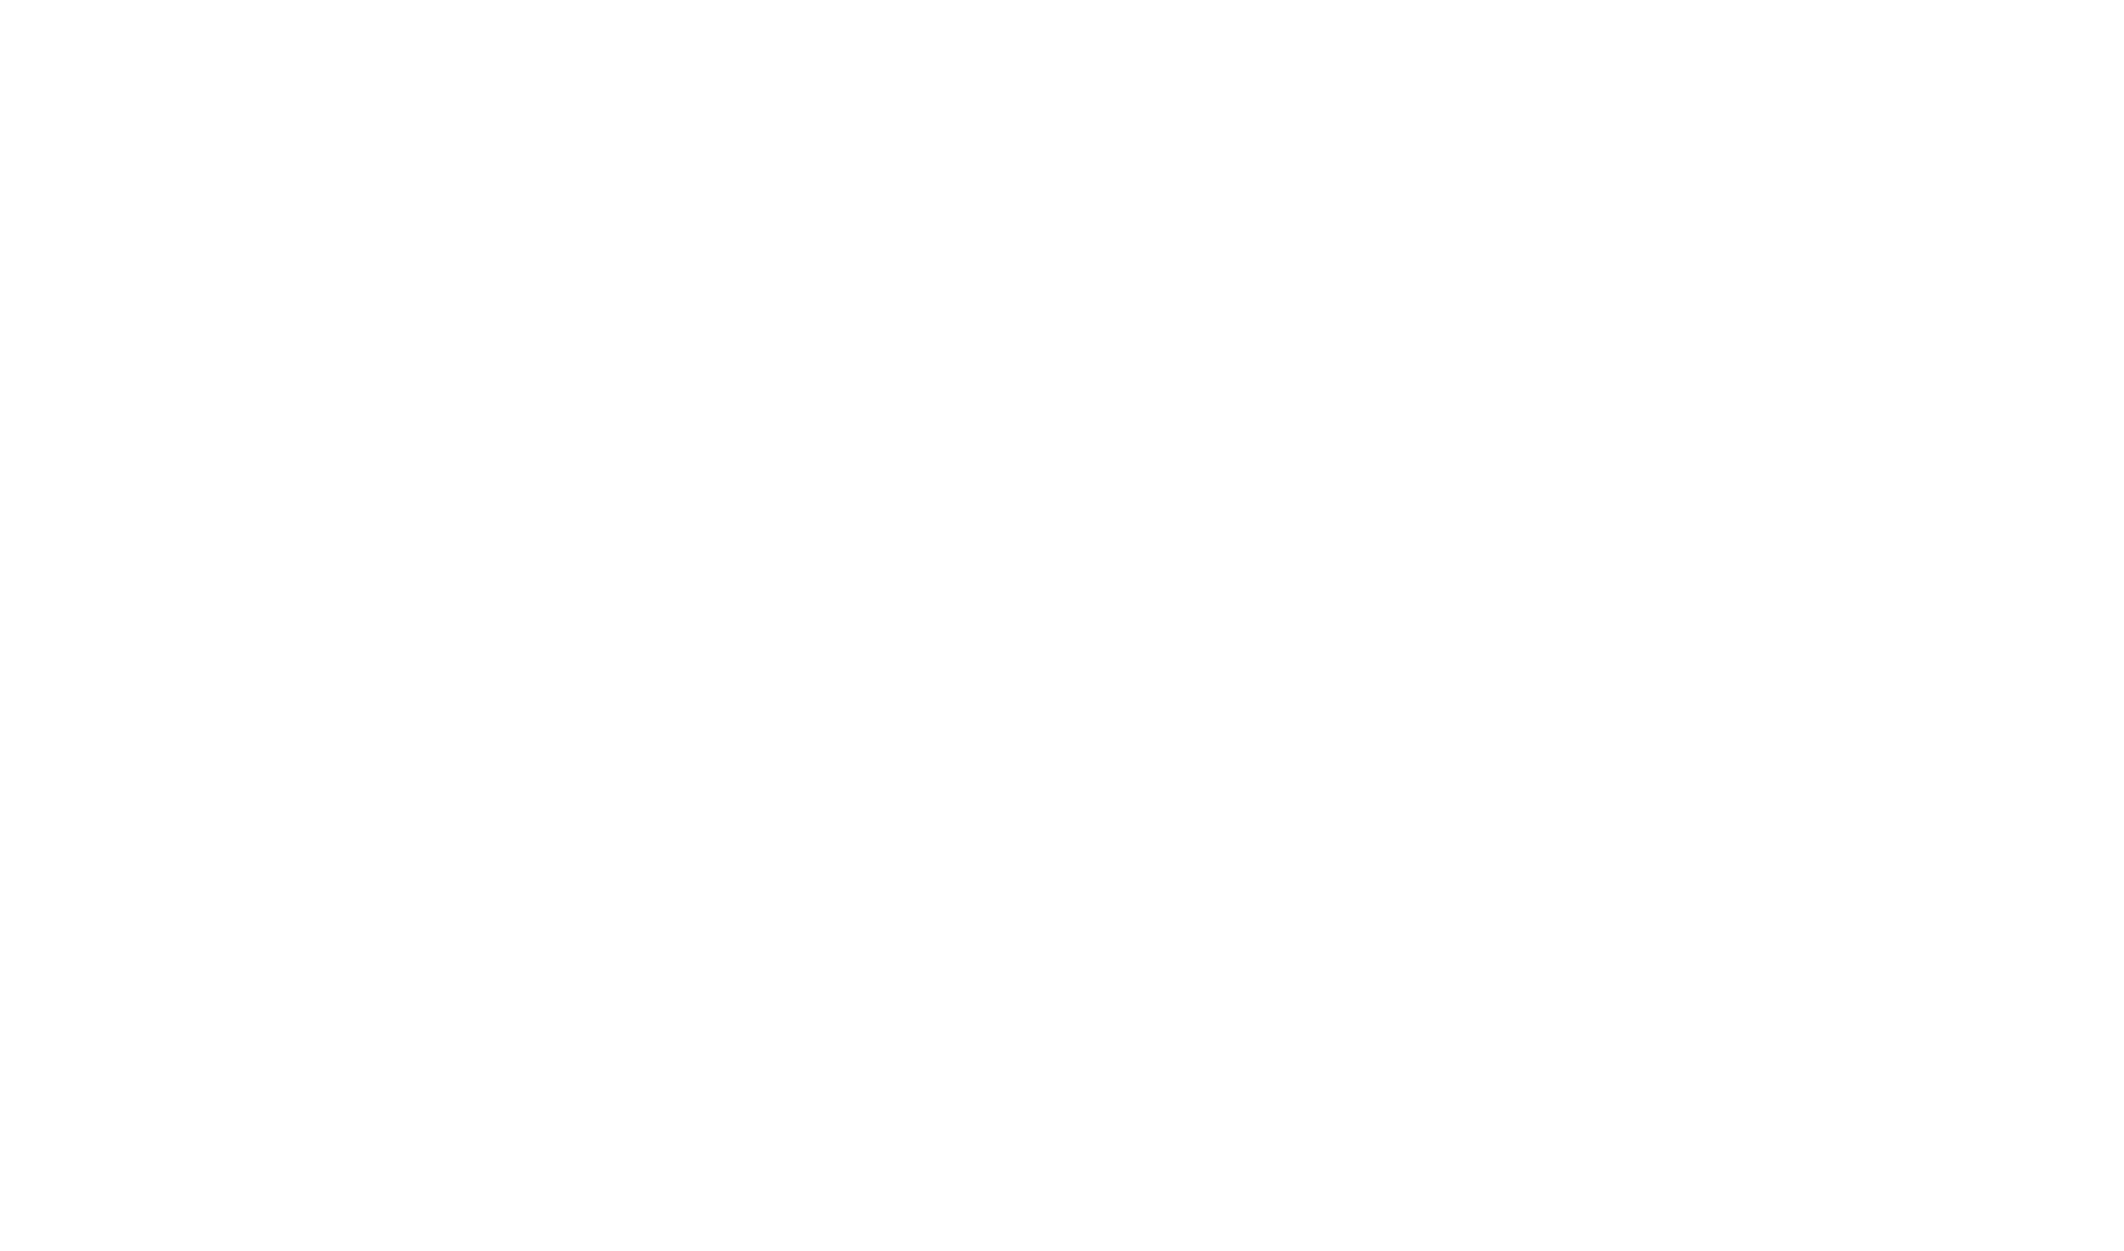 Bob Mcdermott for U.S. Senate